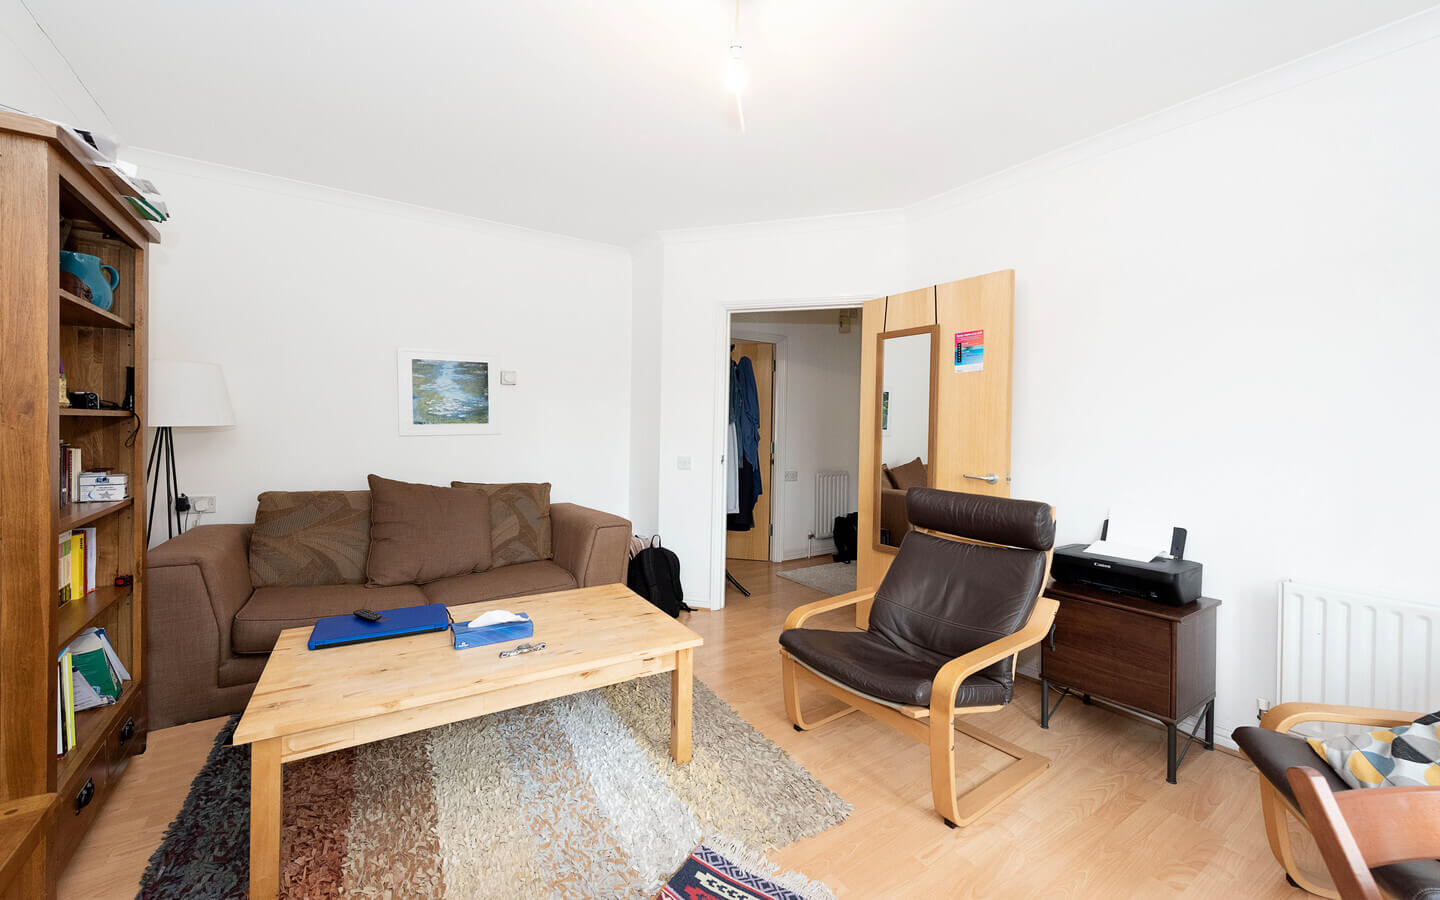 1 Bedroom Flat For Rent - Hackney - London - 5-36-E9-5HG